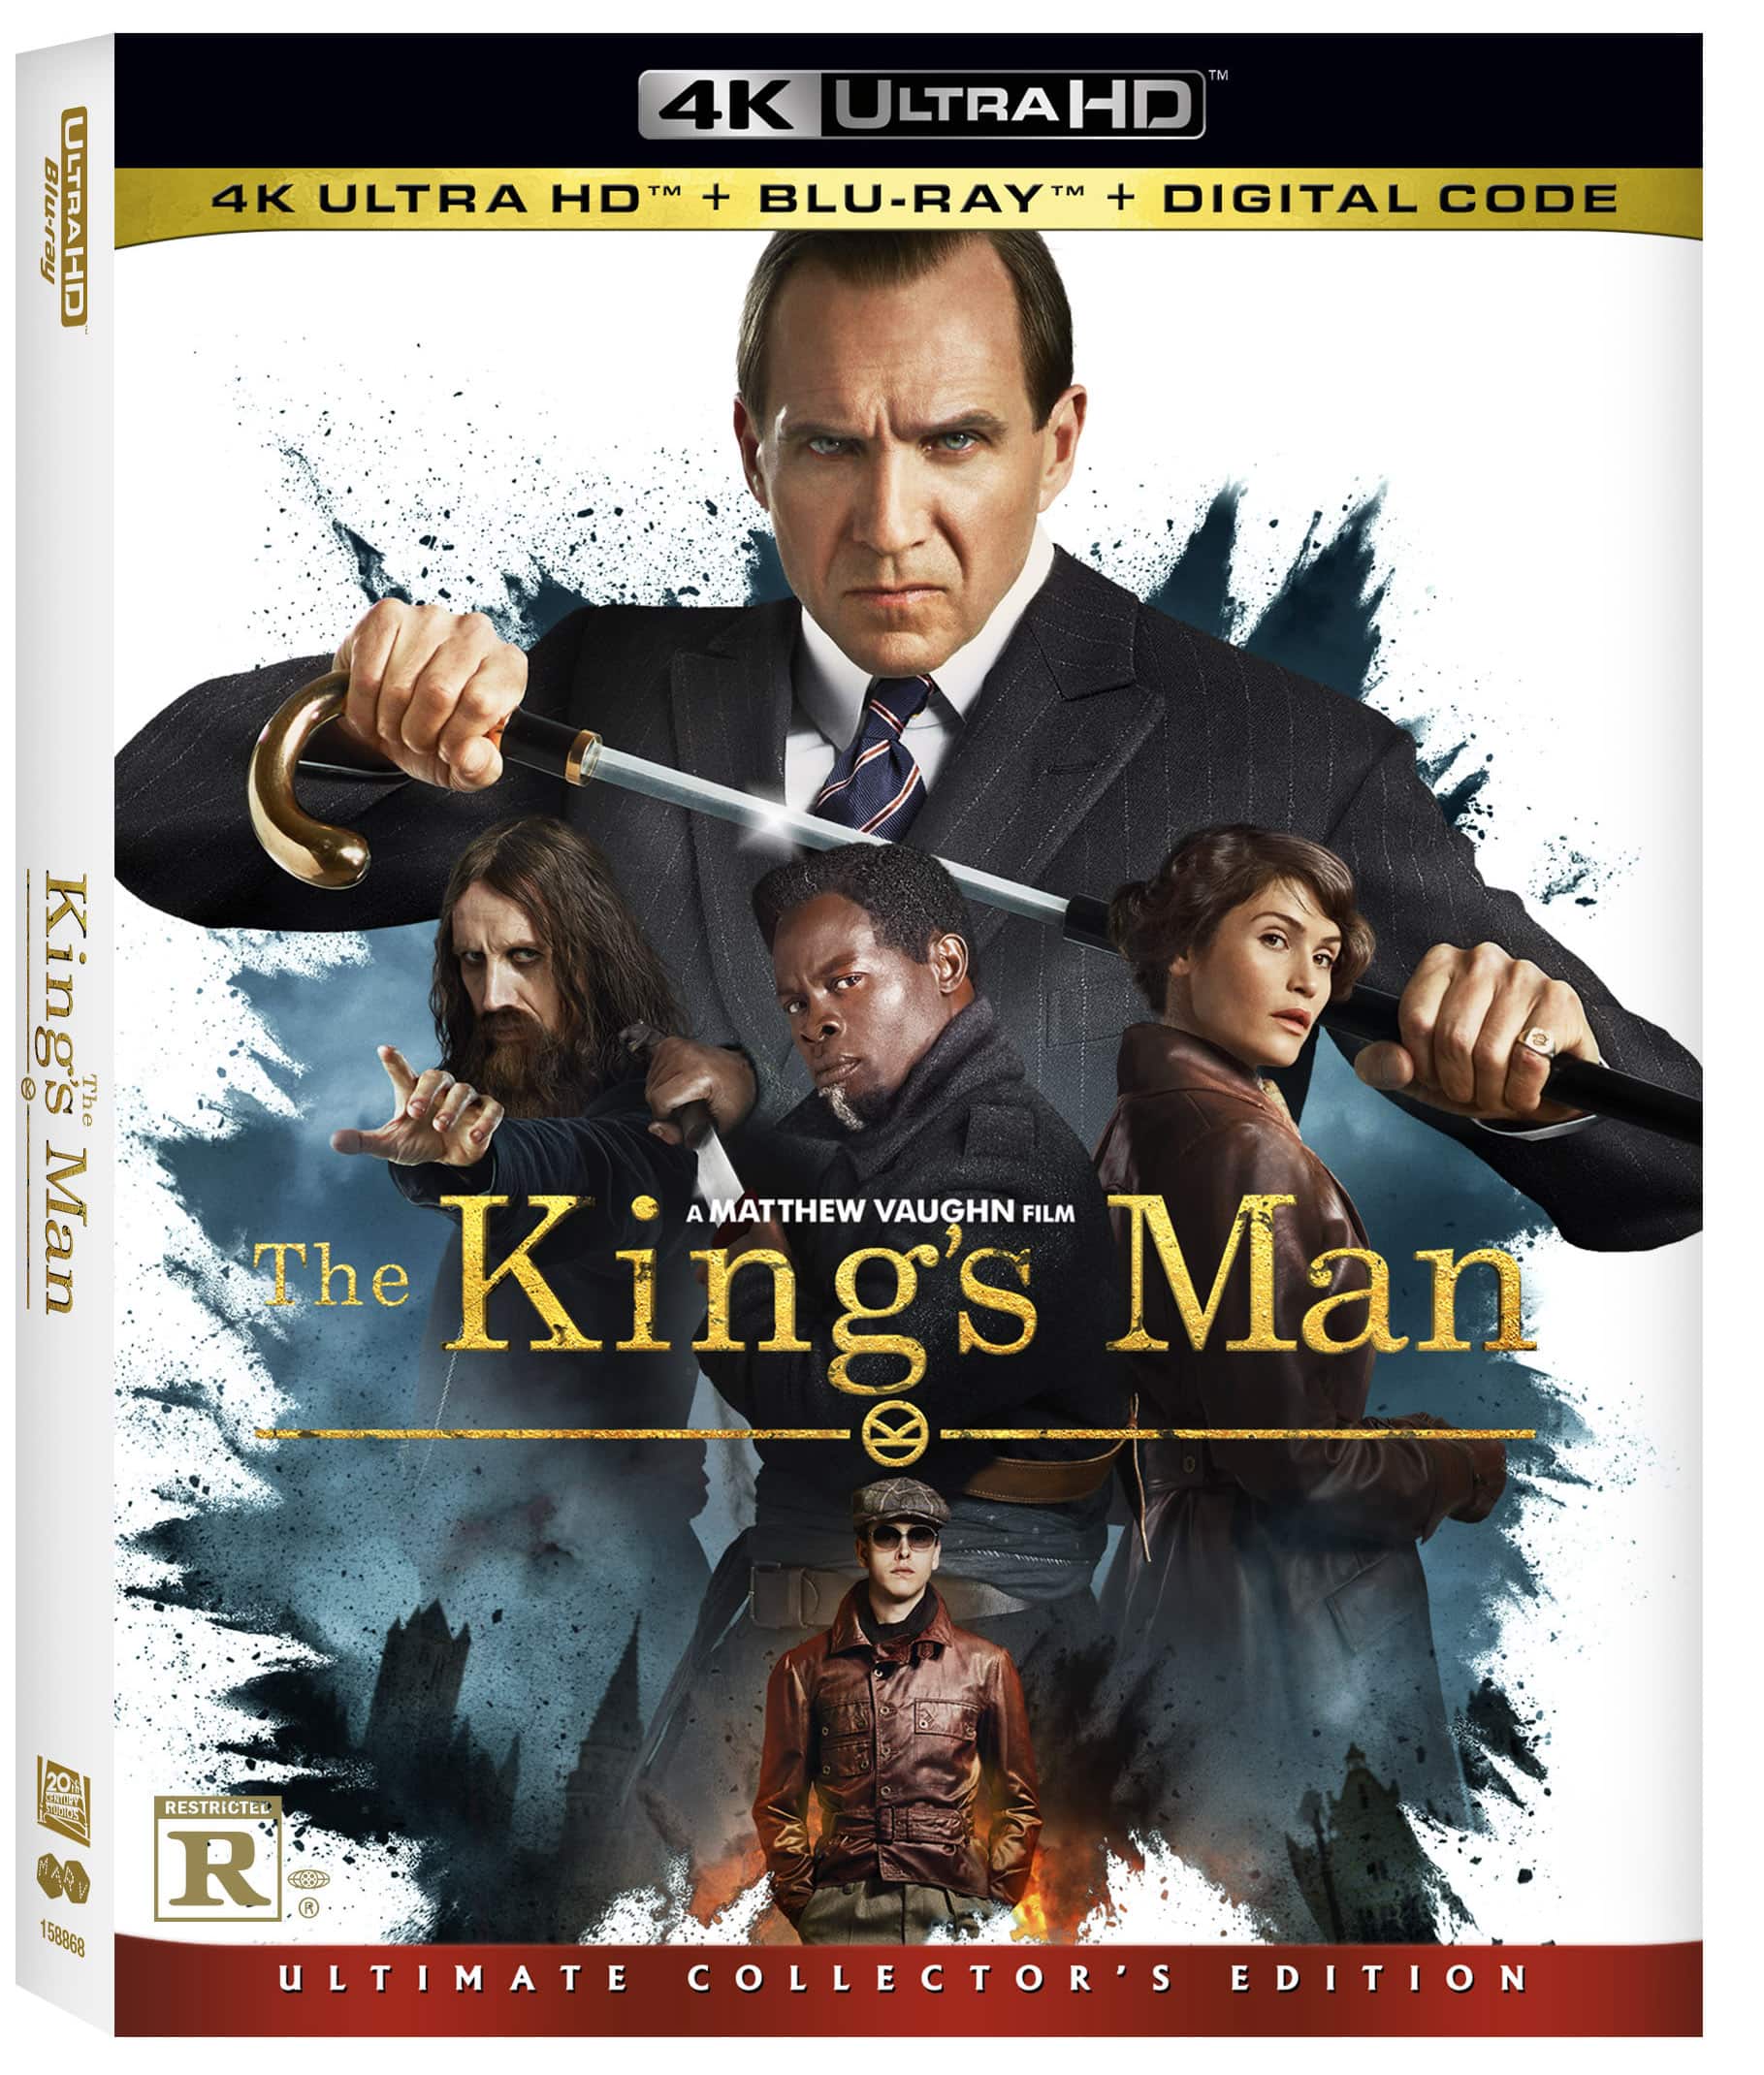 The King's Man Bonus Features